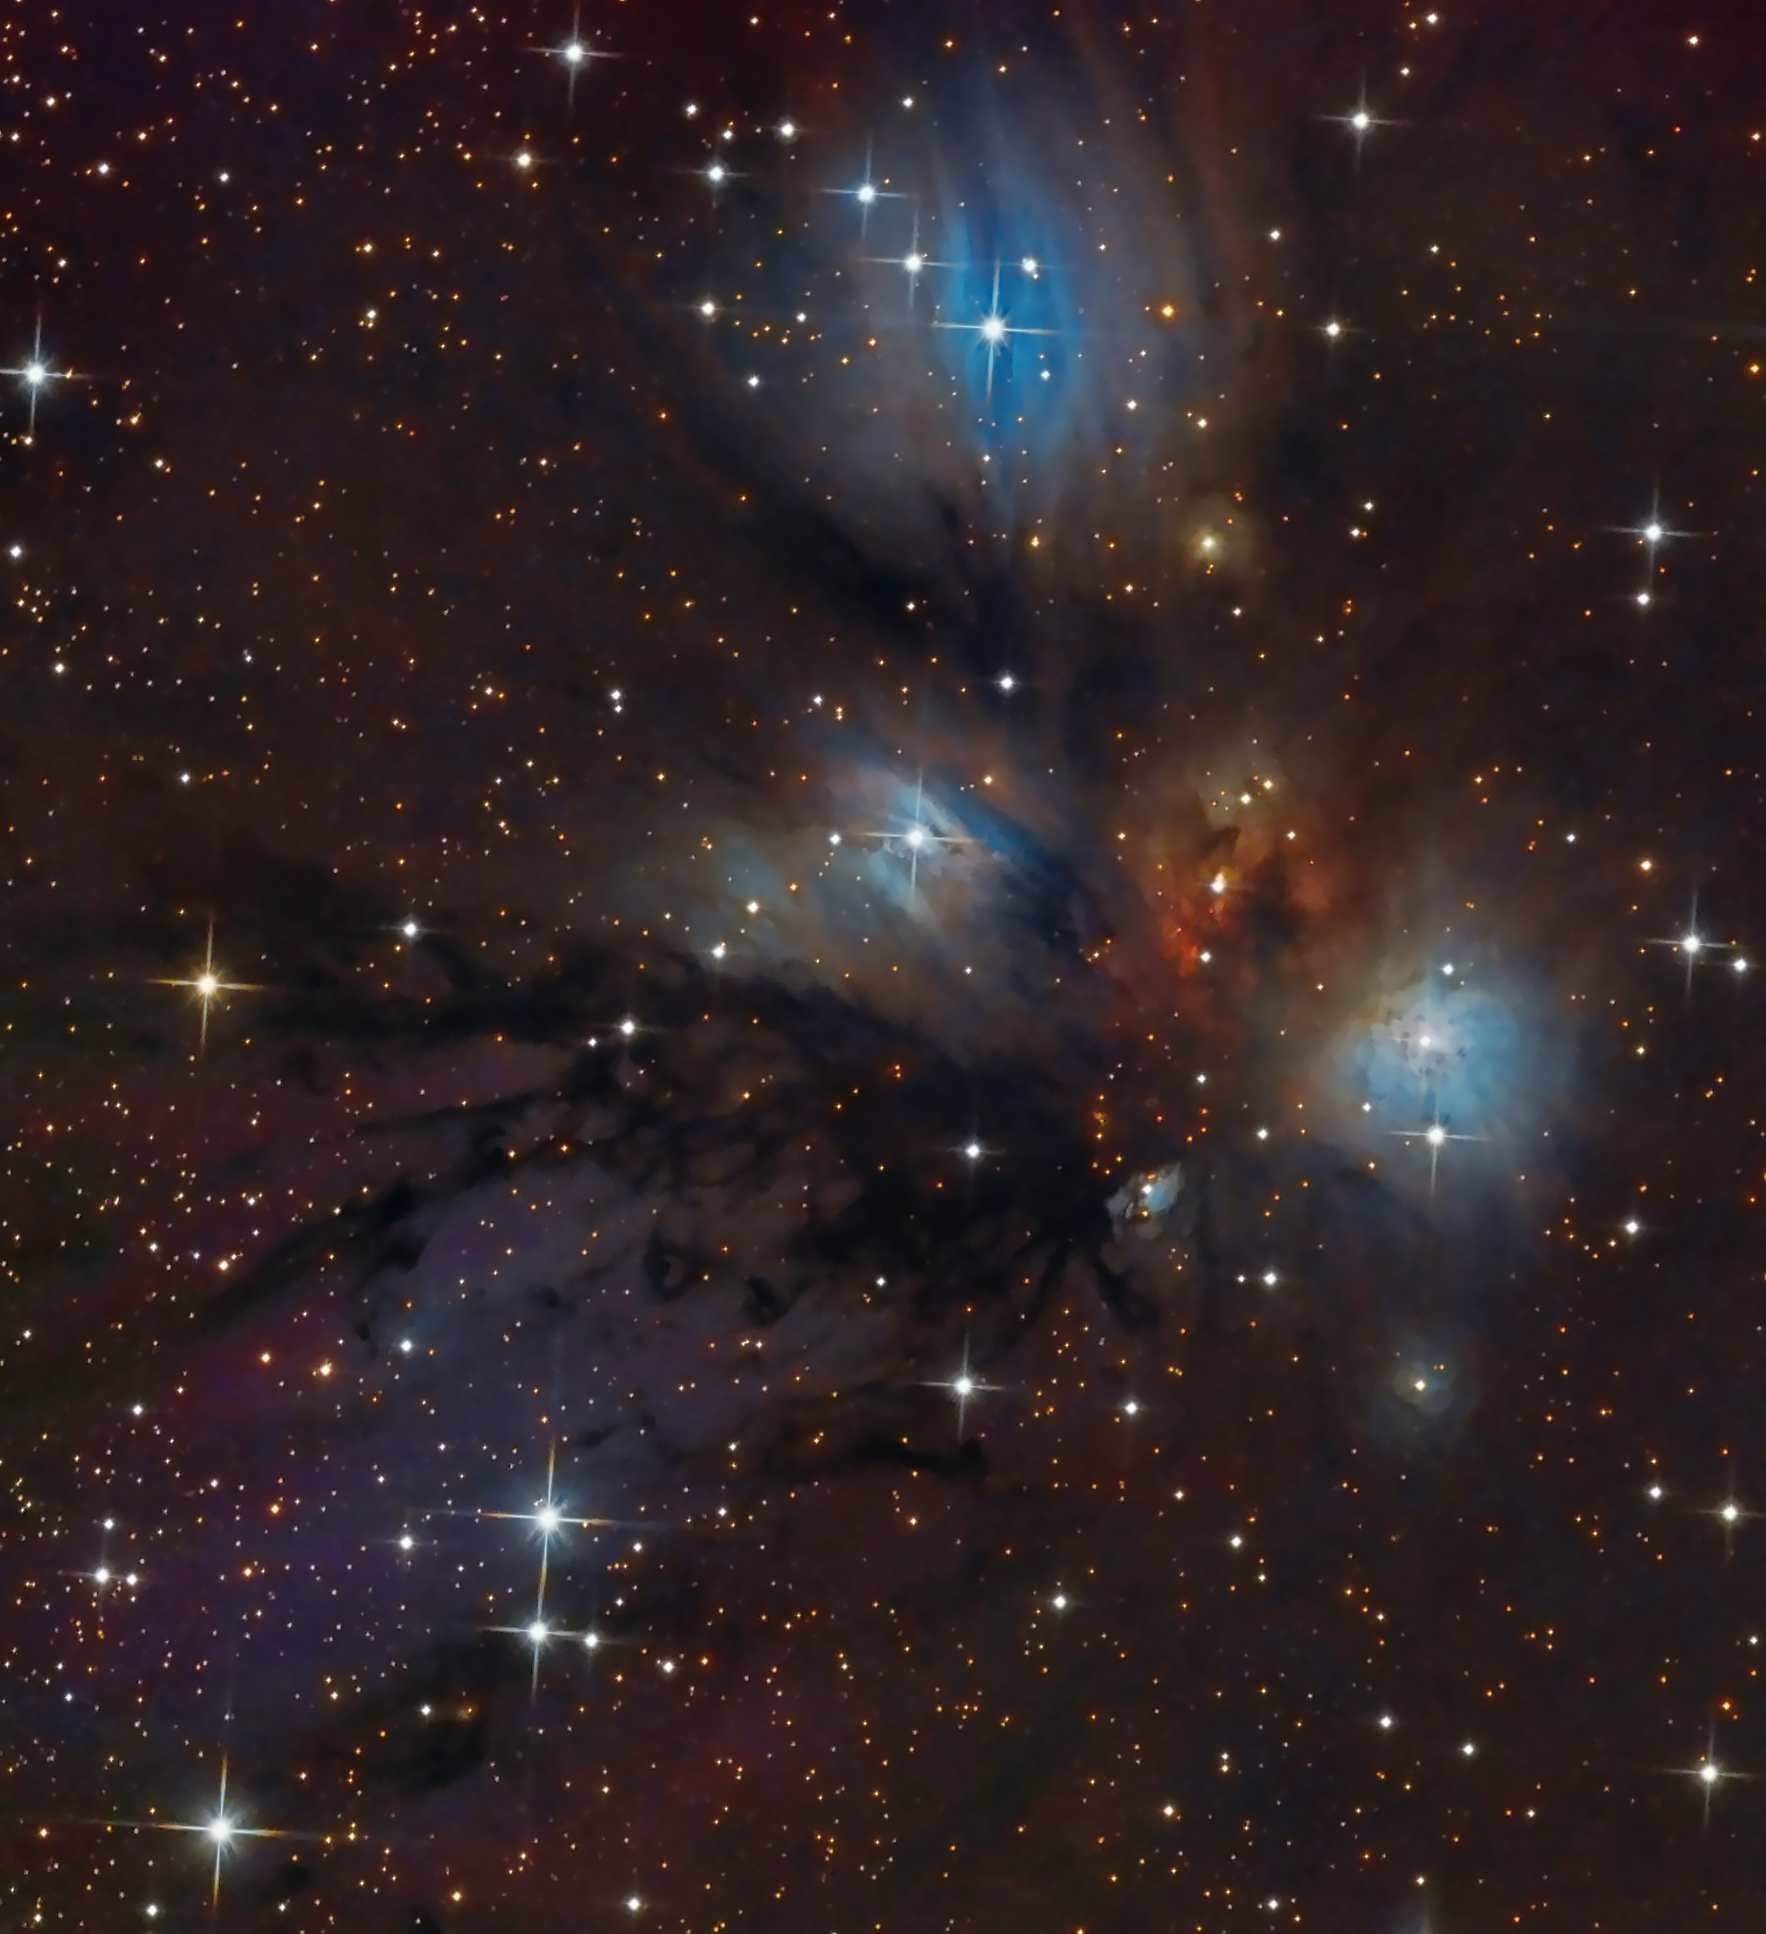 Angel Nebula-NGC 2170